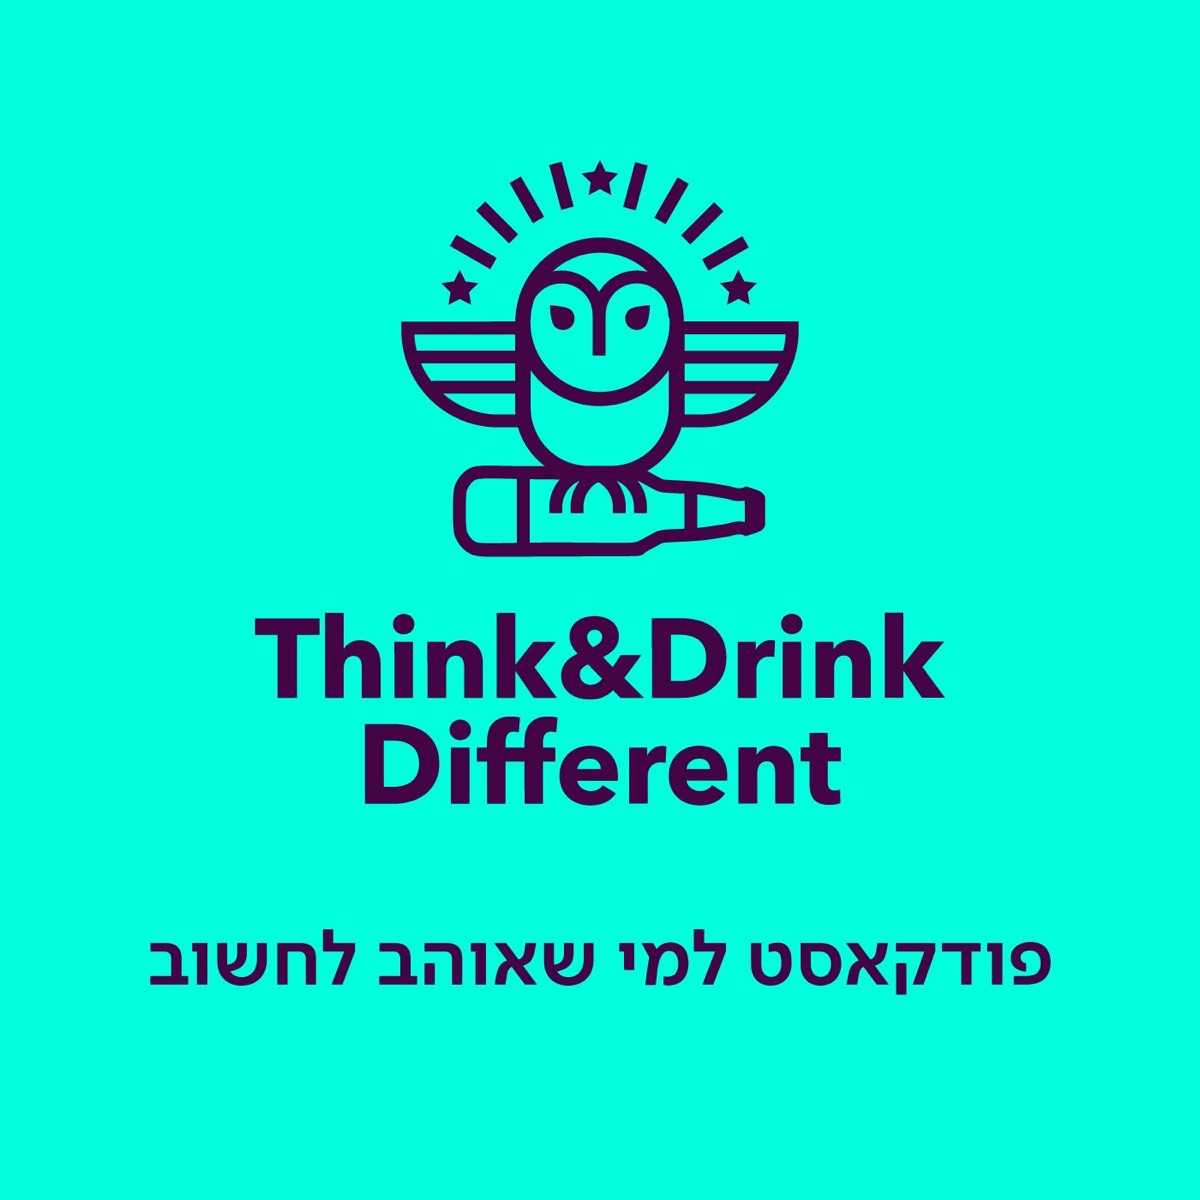 Think&Drink Different: פודקאסט למי שאוהב לחשוב